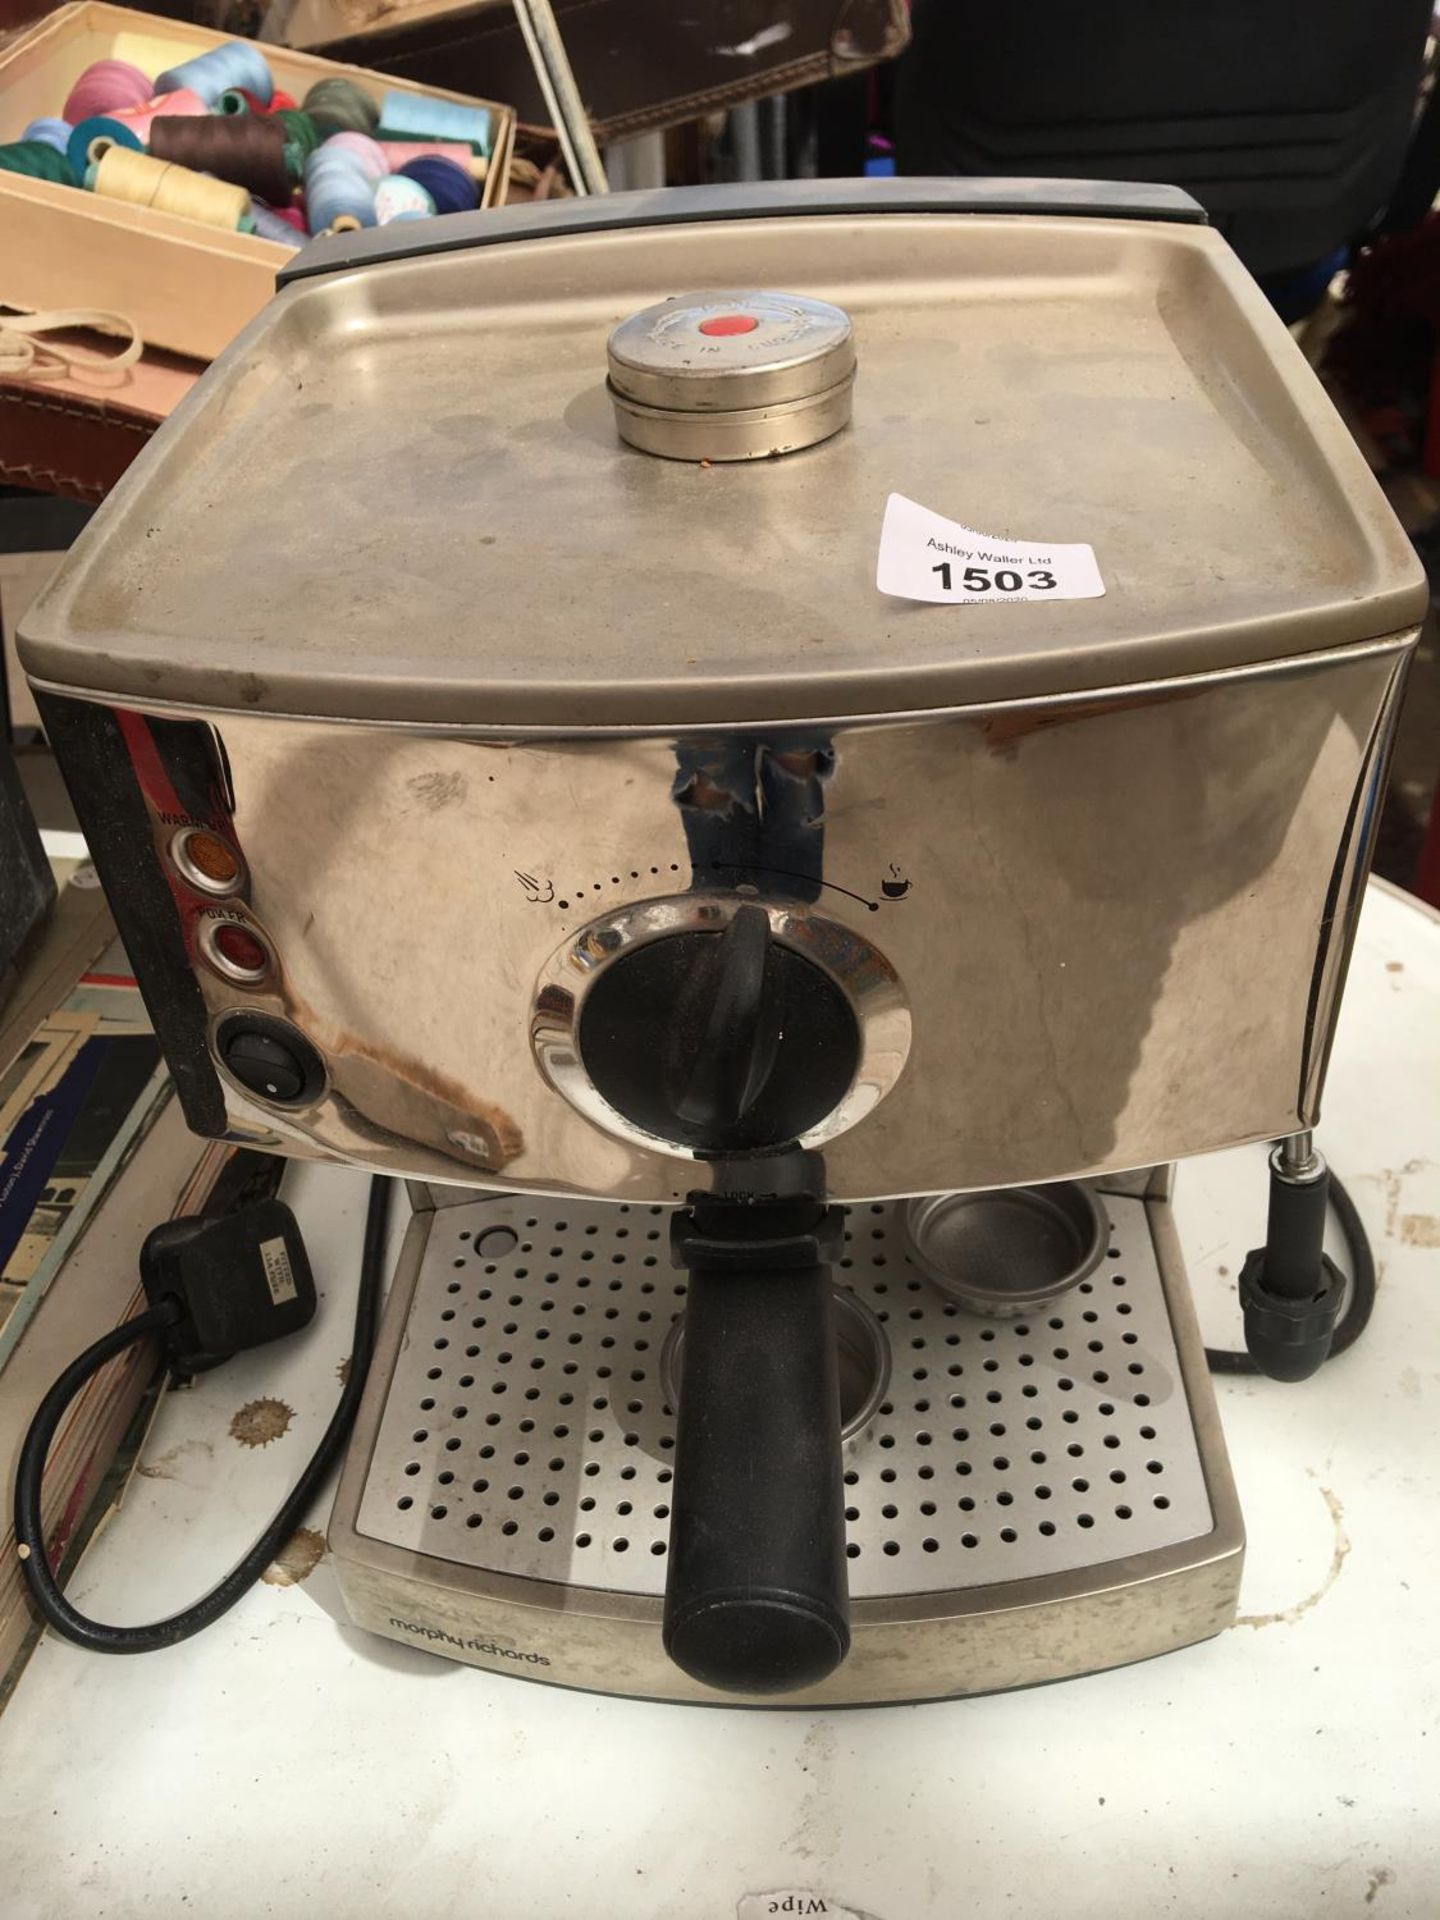 A MORPHY RICHARDS COFFEE MACHINE